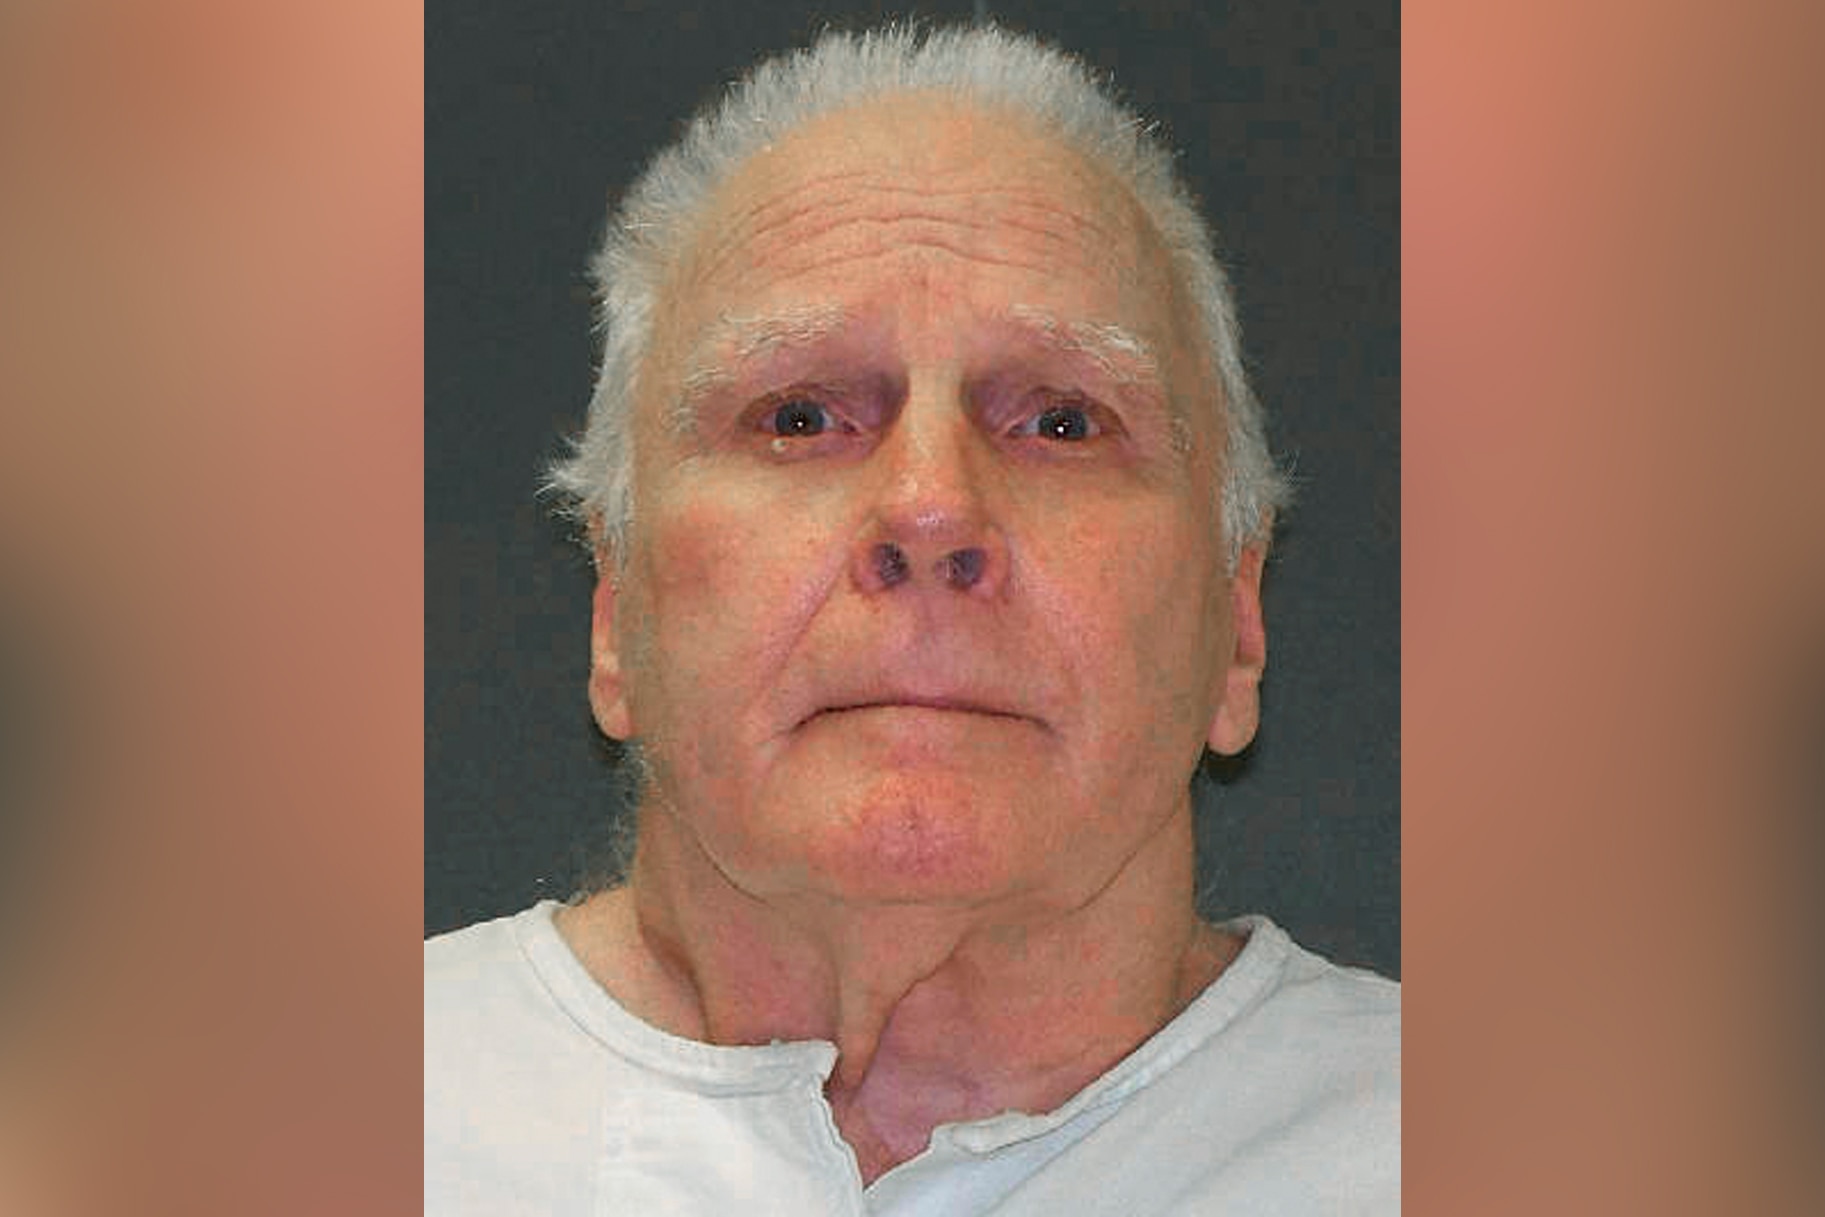 Death row inmate Carl Wayne Buntion Texas' oldest death row inmate